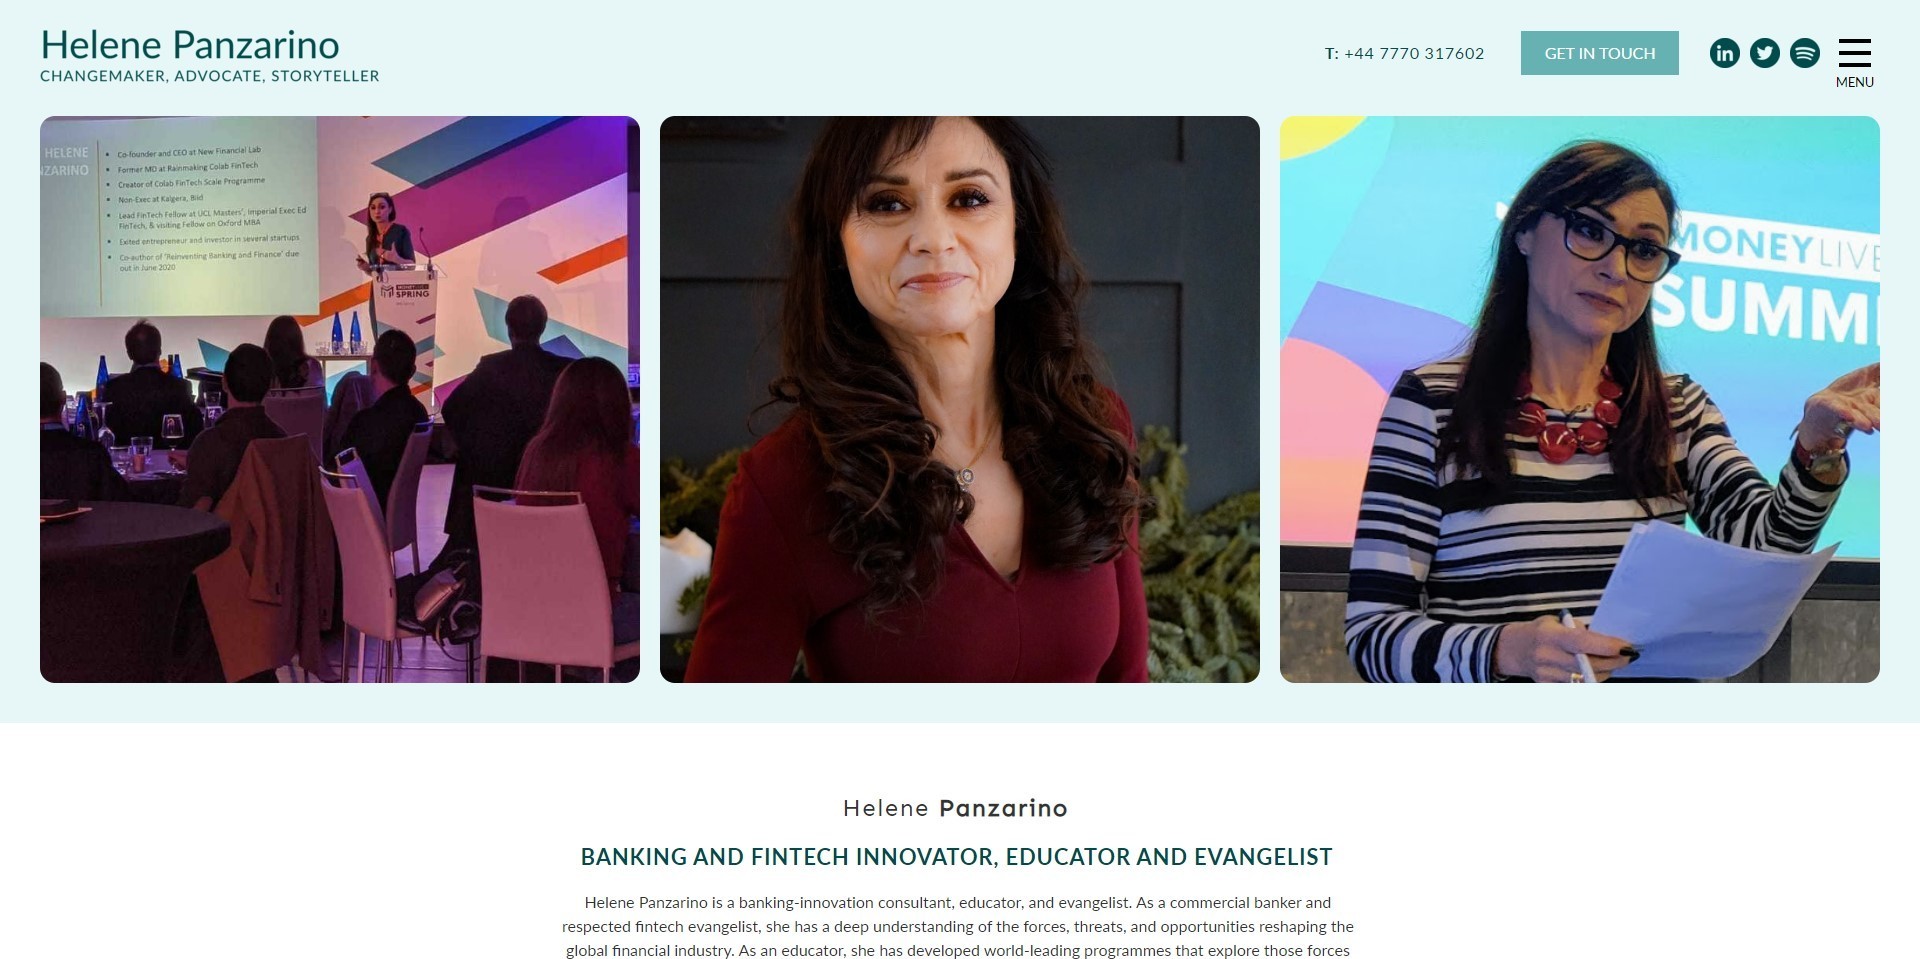 The new Helene Panzarino website designed by it'seeze, displayed on desktop